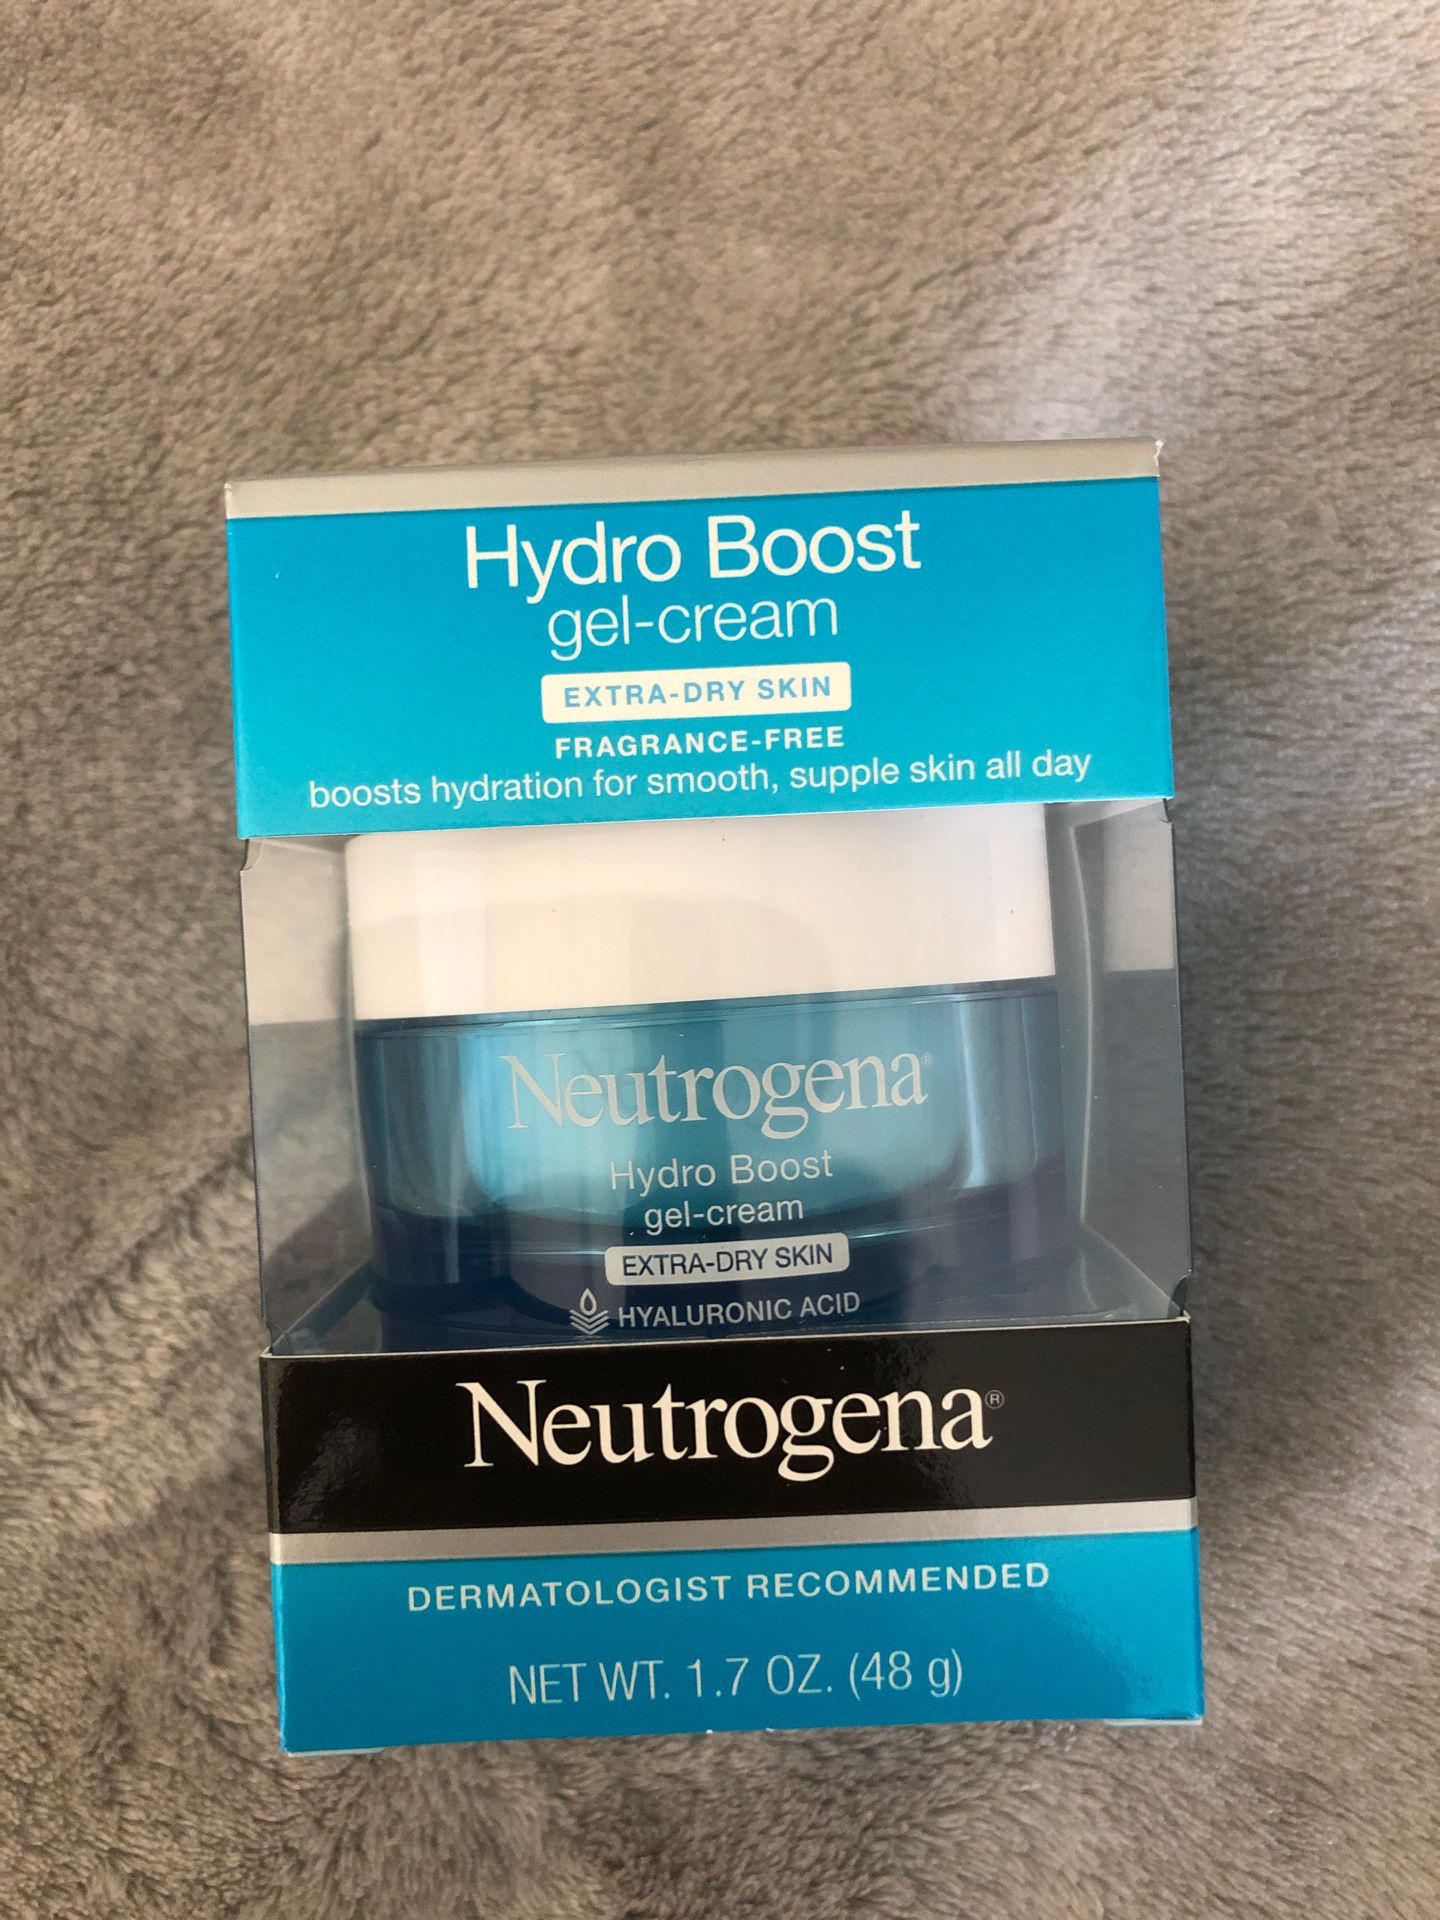 Neutrogena Hydro Boost Gel-Cream (New in Box)